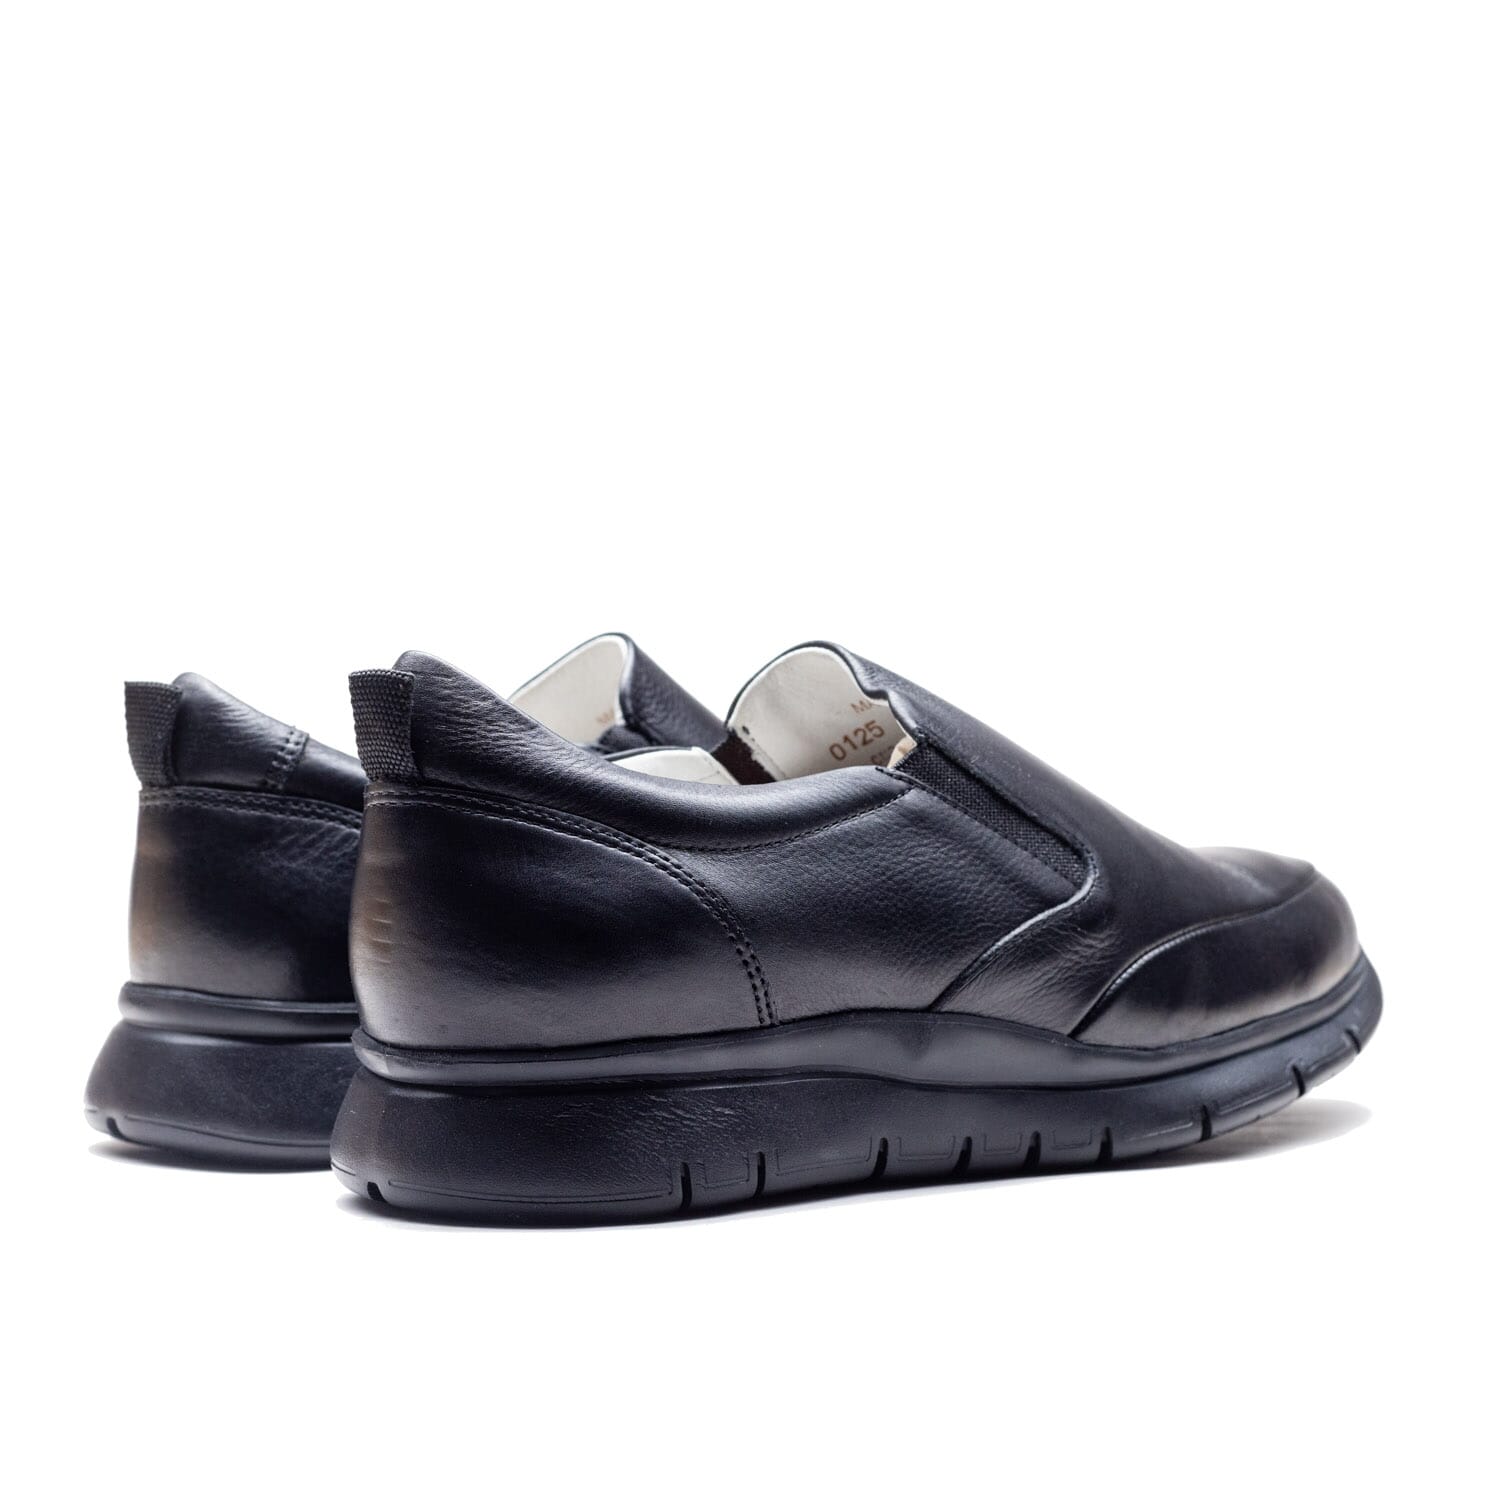 Anatomic – 010125 – Black – Perocili Shoes